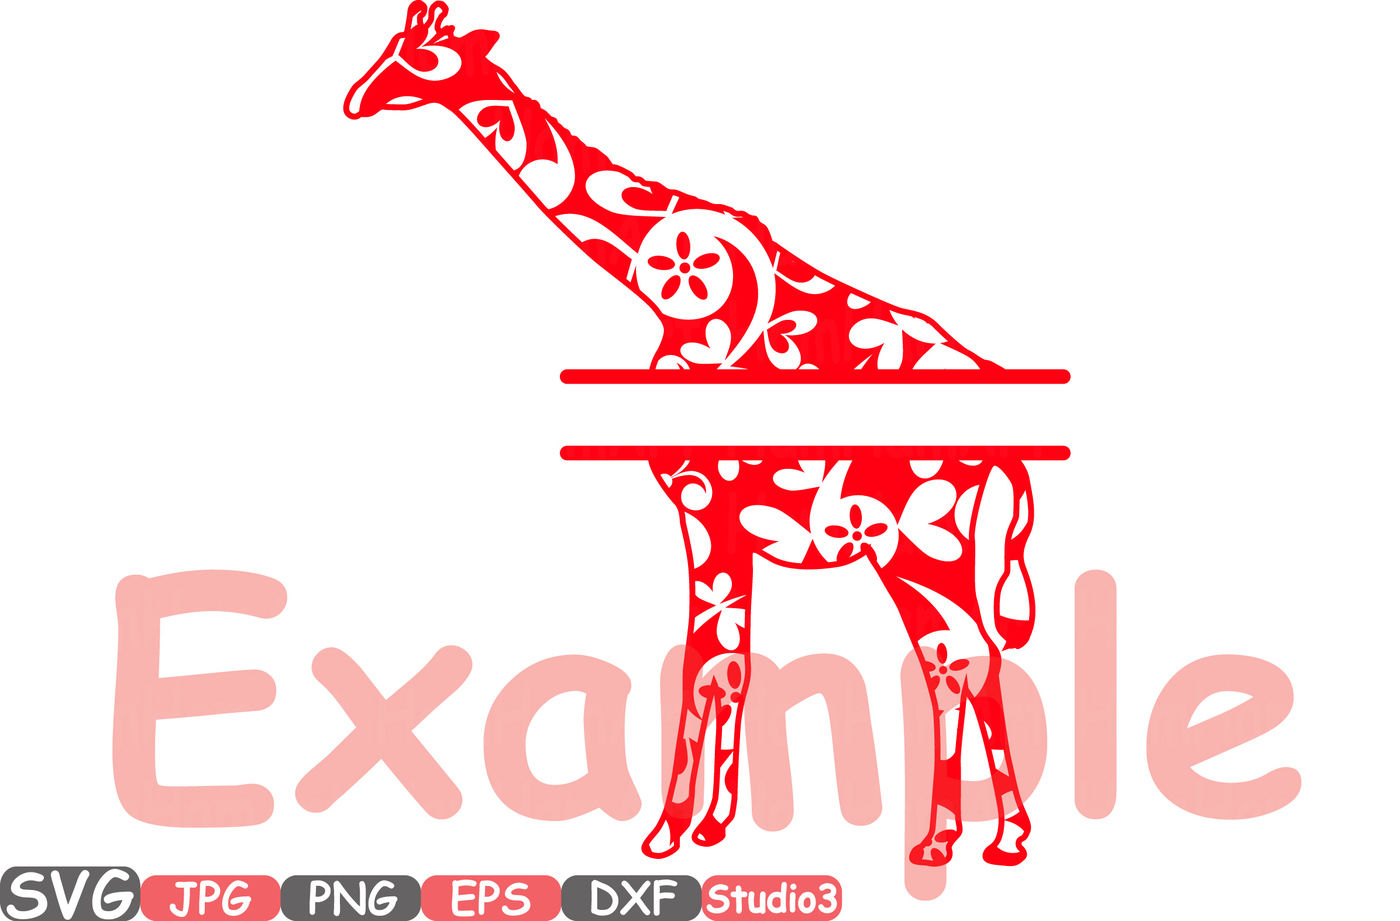 Download Split Giraffe Mascot Jungle Animal Safari Monogram Circle Cutting Files Your Text Svg Silhouette Clipart Cricut Design Studio3 Cameo 392s By Hamhamart Thehungryjpeg Com